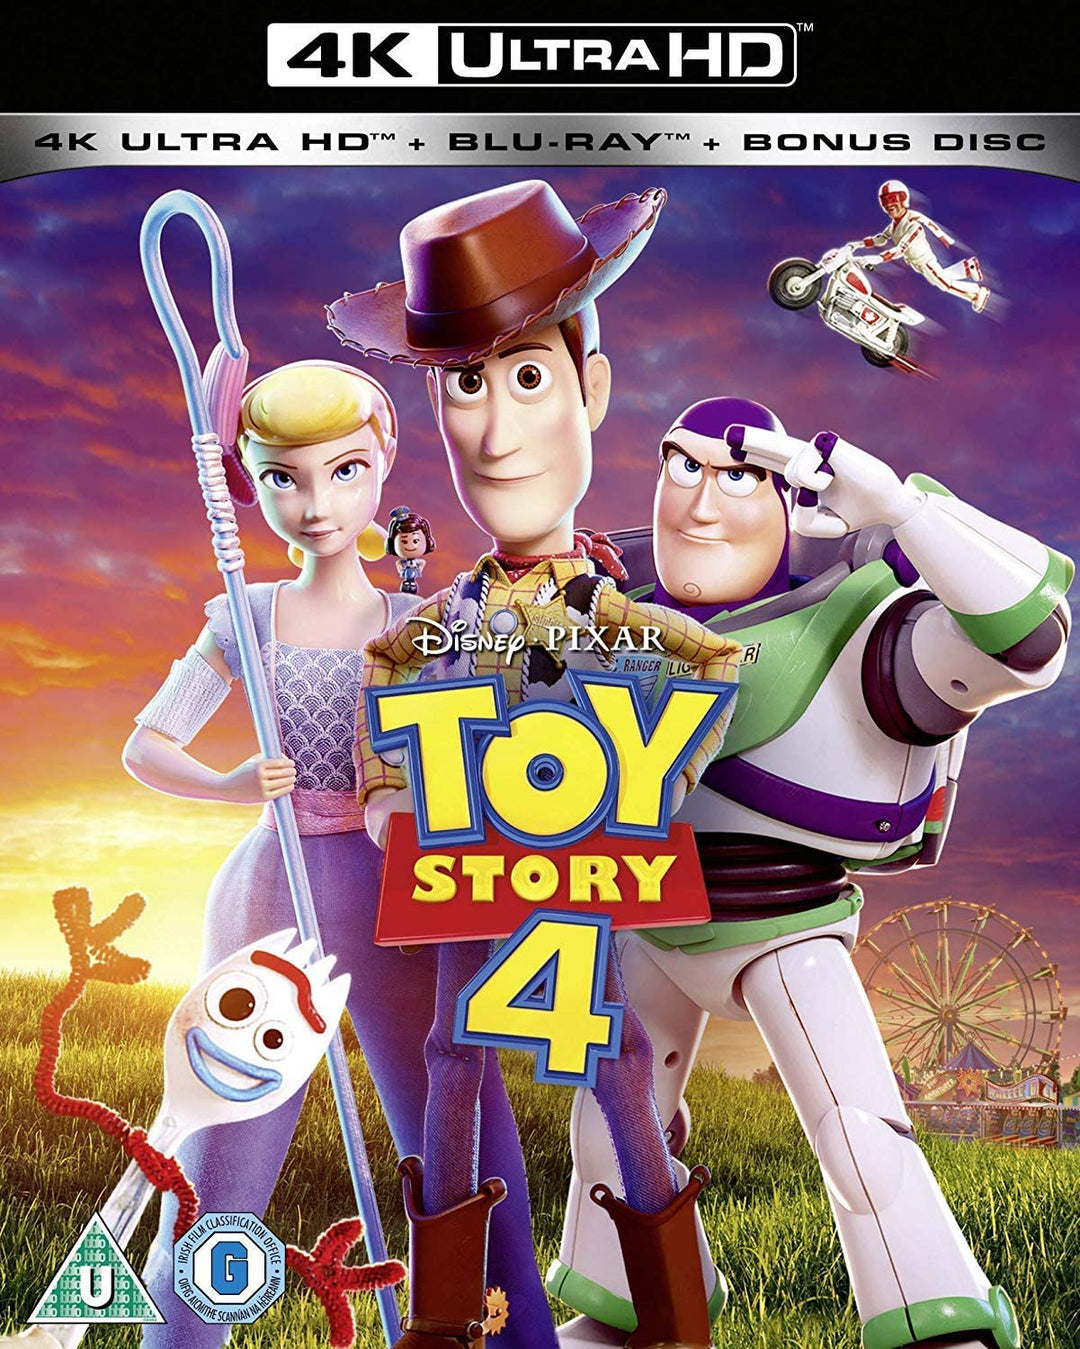 Disney & Pixar's Toy Story 4 - Animation [4k]